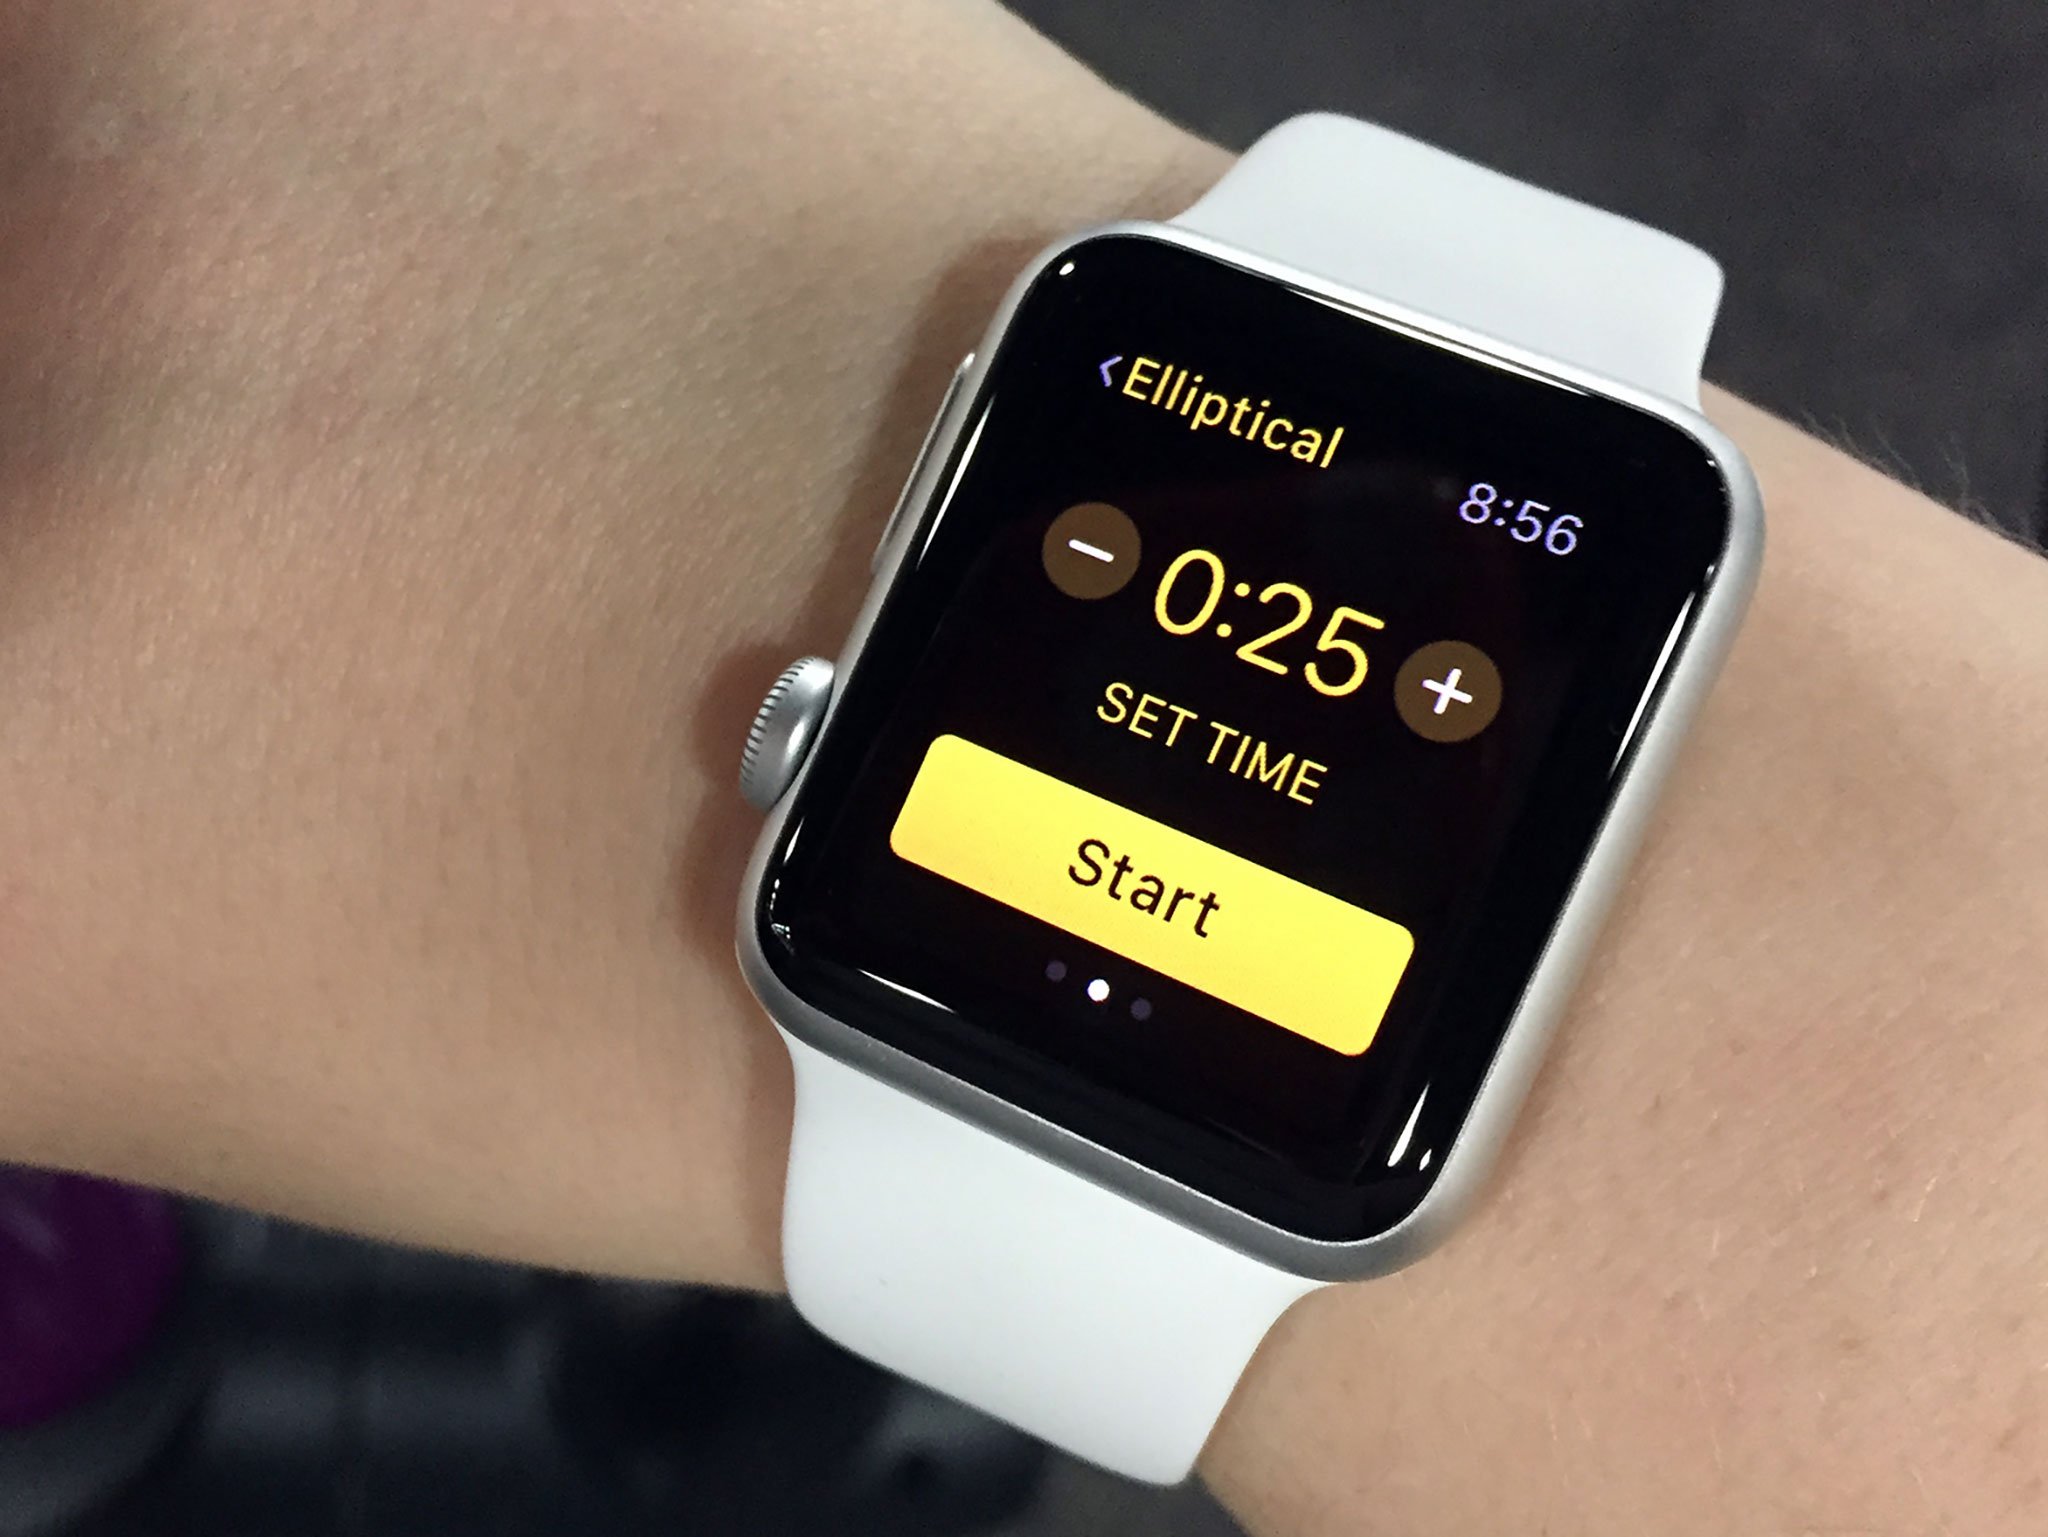 Apple Watch Workout app